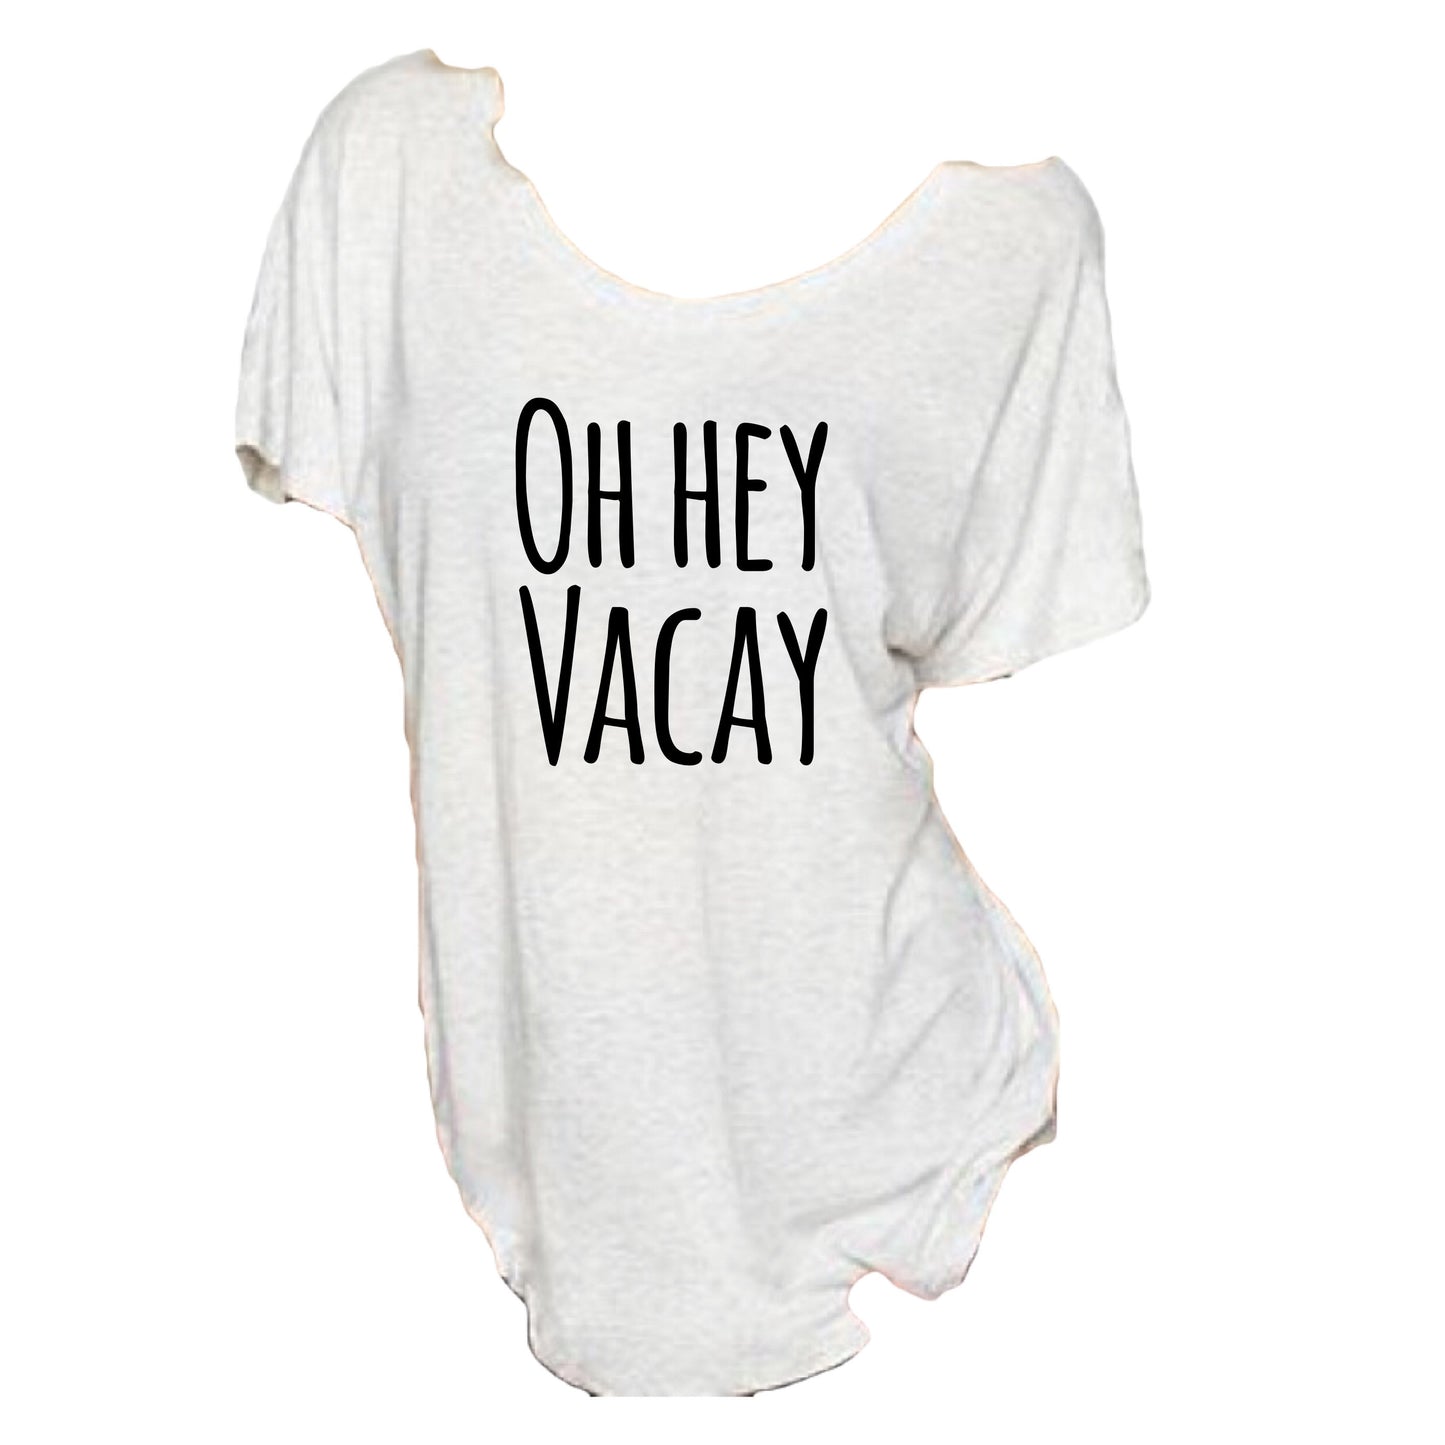 Oh hey vacay shirt, vacation shirt, beach bound shirt, cute beach shirt, vacation gift, I need a vacation shirt, cruise shirt, fashion shirt